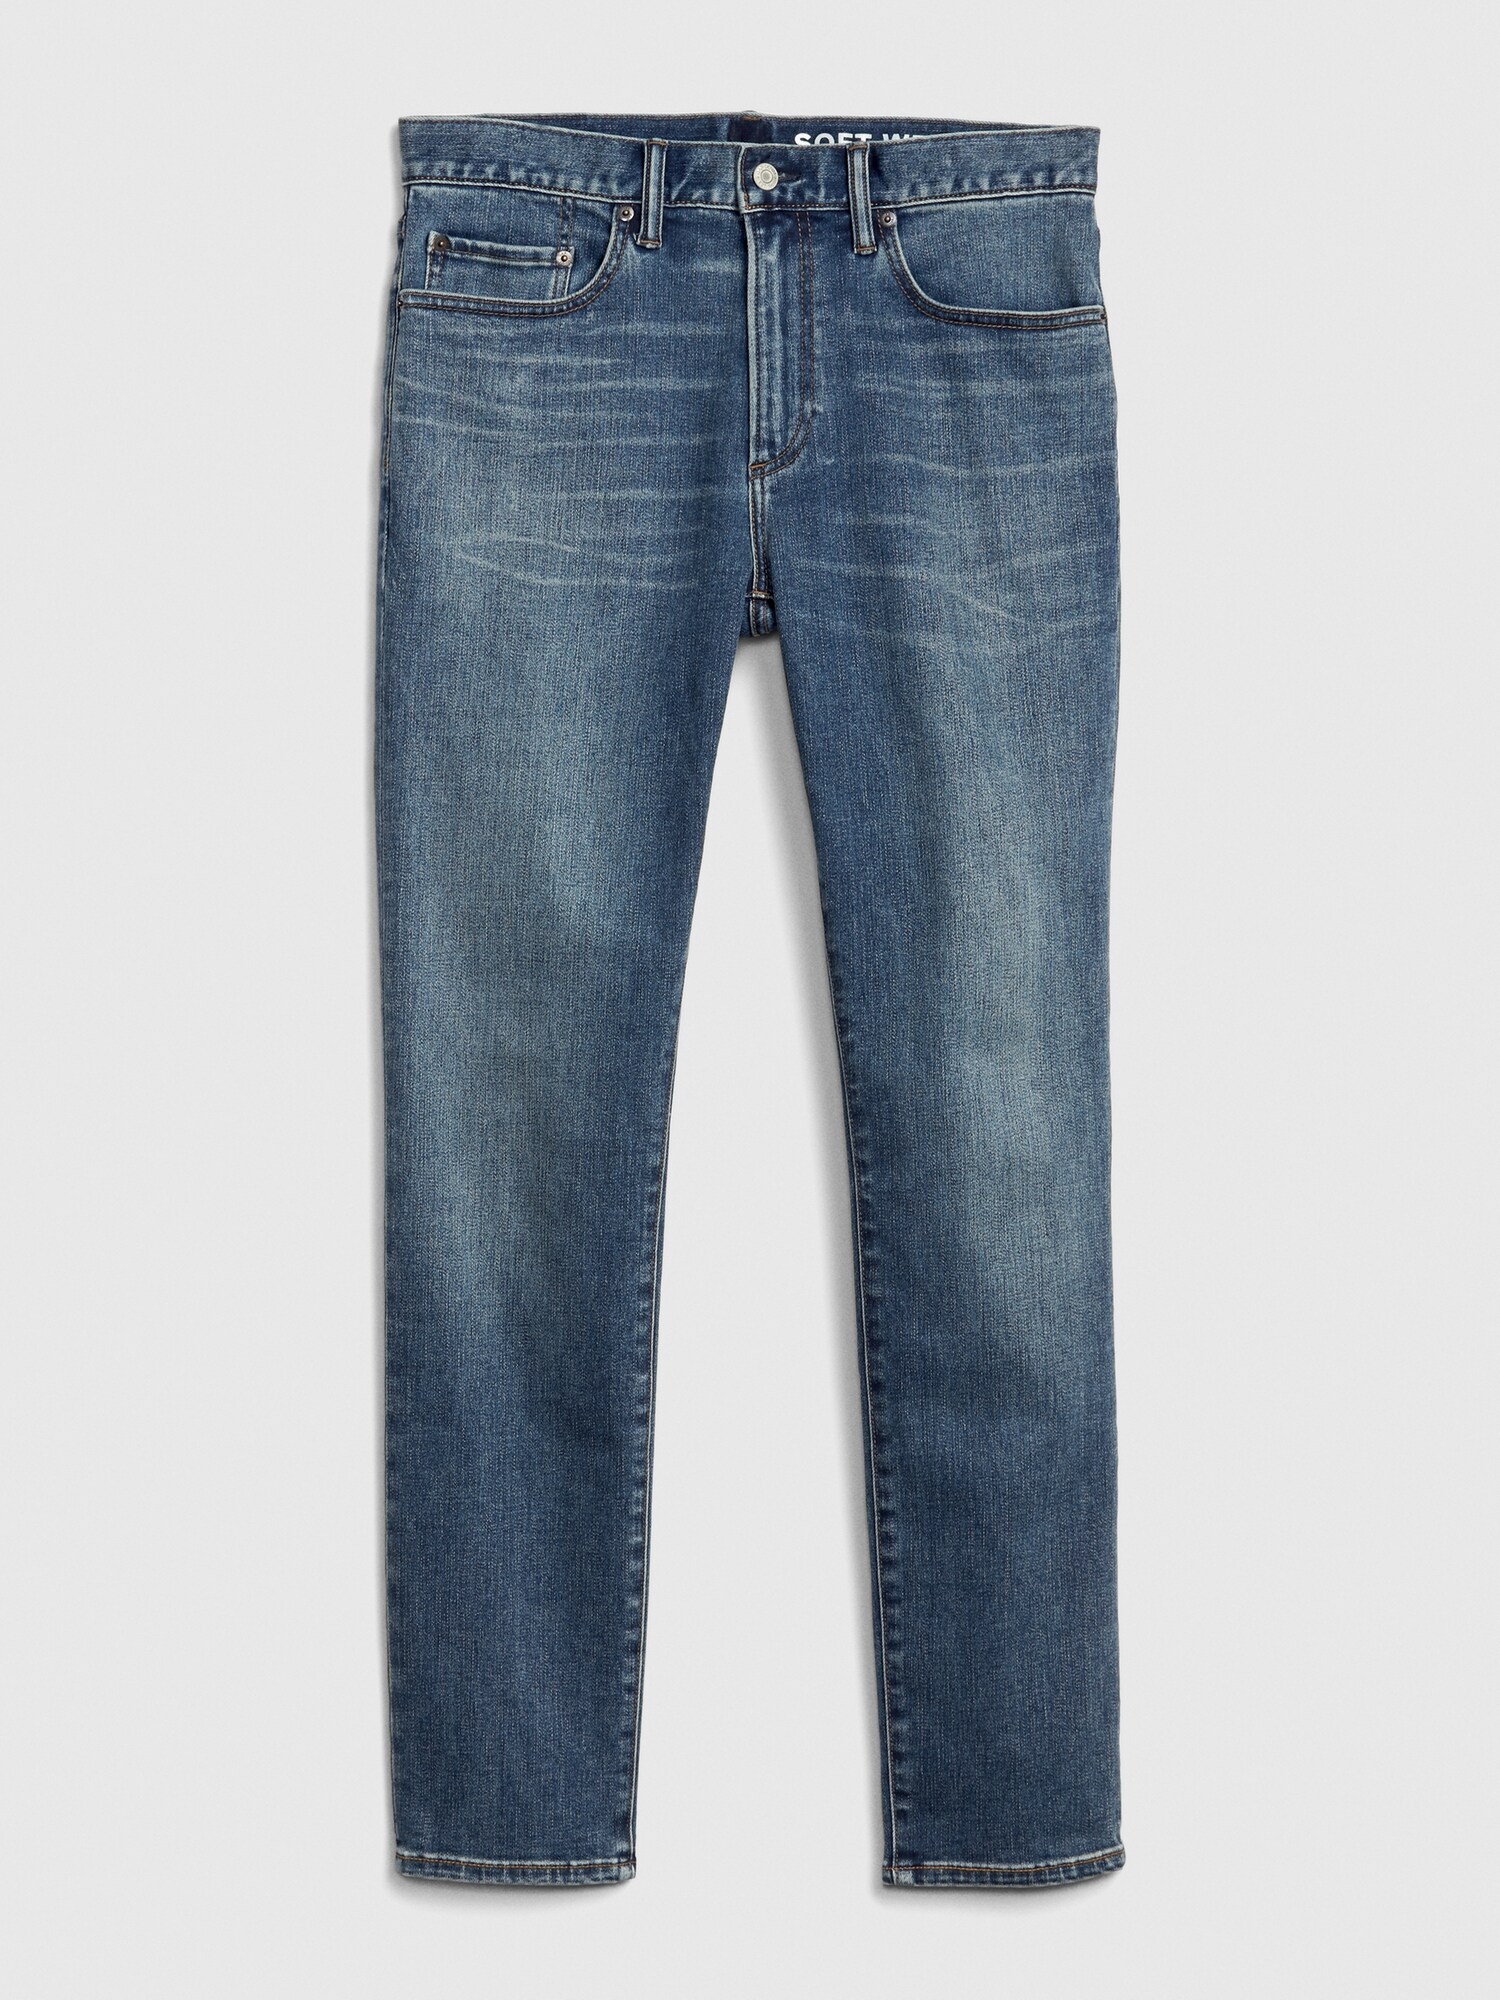 Gap Flex Soft Wear Skinny Jean Pantolon. 5